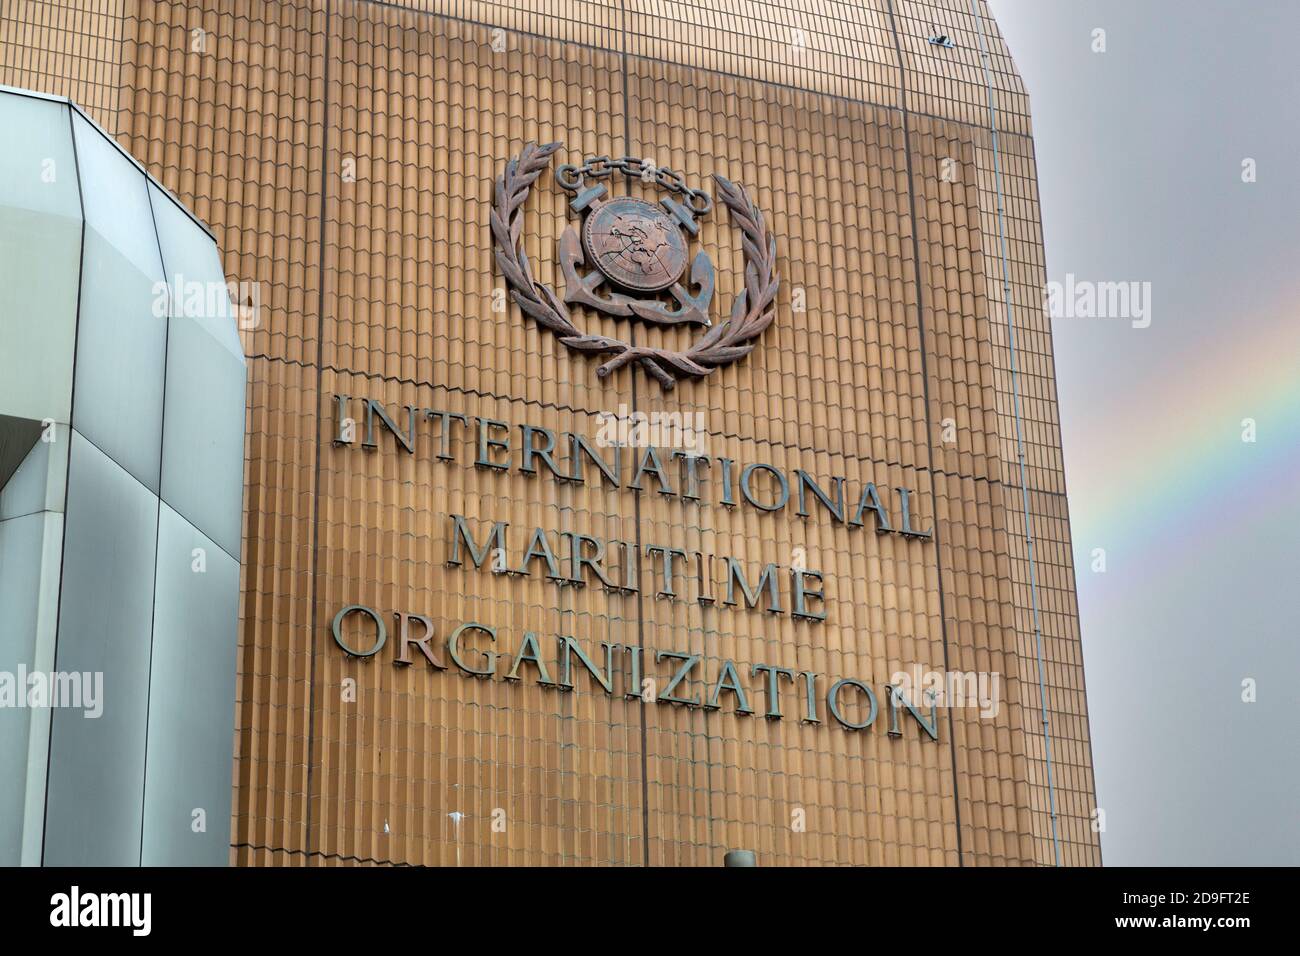 International maritime organization organisation building, london, uk Stock Photo